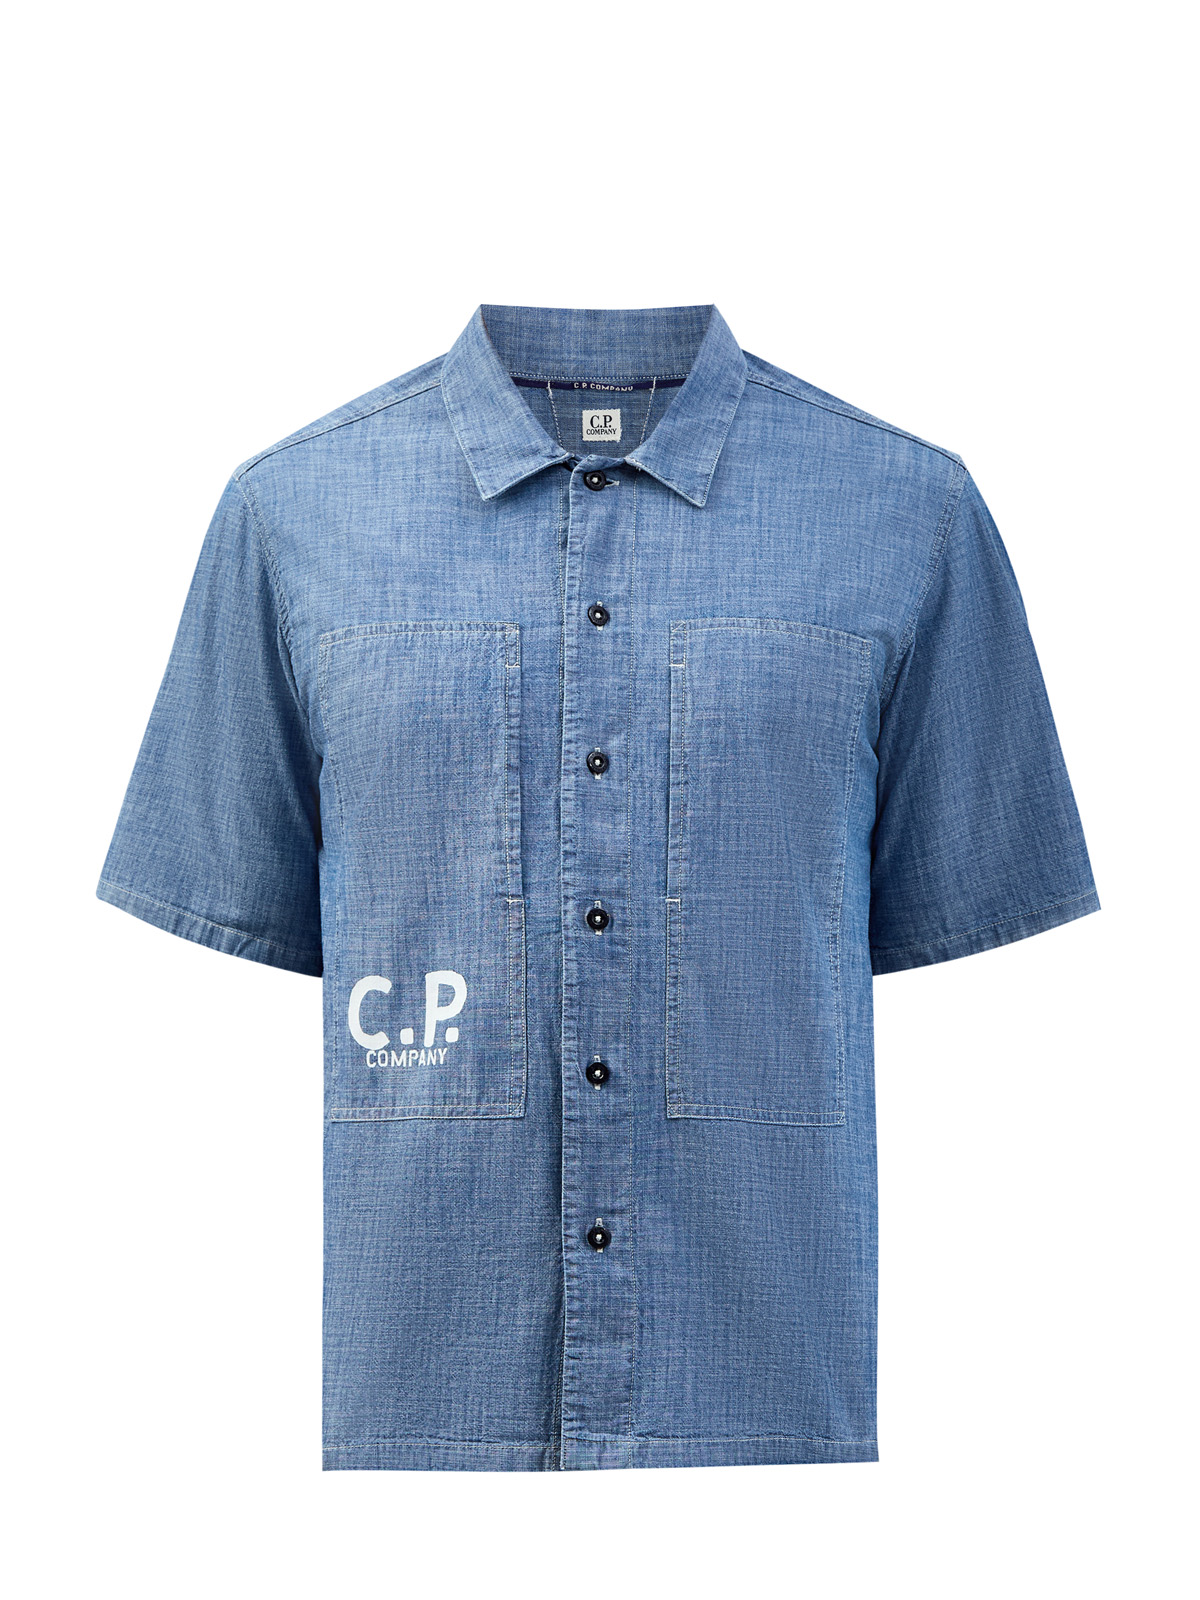 Рубашка из тонкого хлопкового денима Chambray с принтом C.P.COMPANY, цвет голубой, размер M;L;XL - фото 1